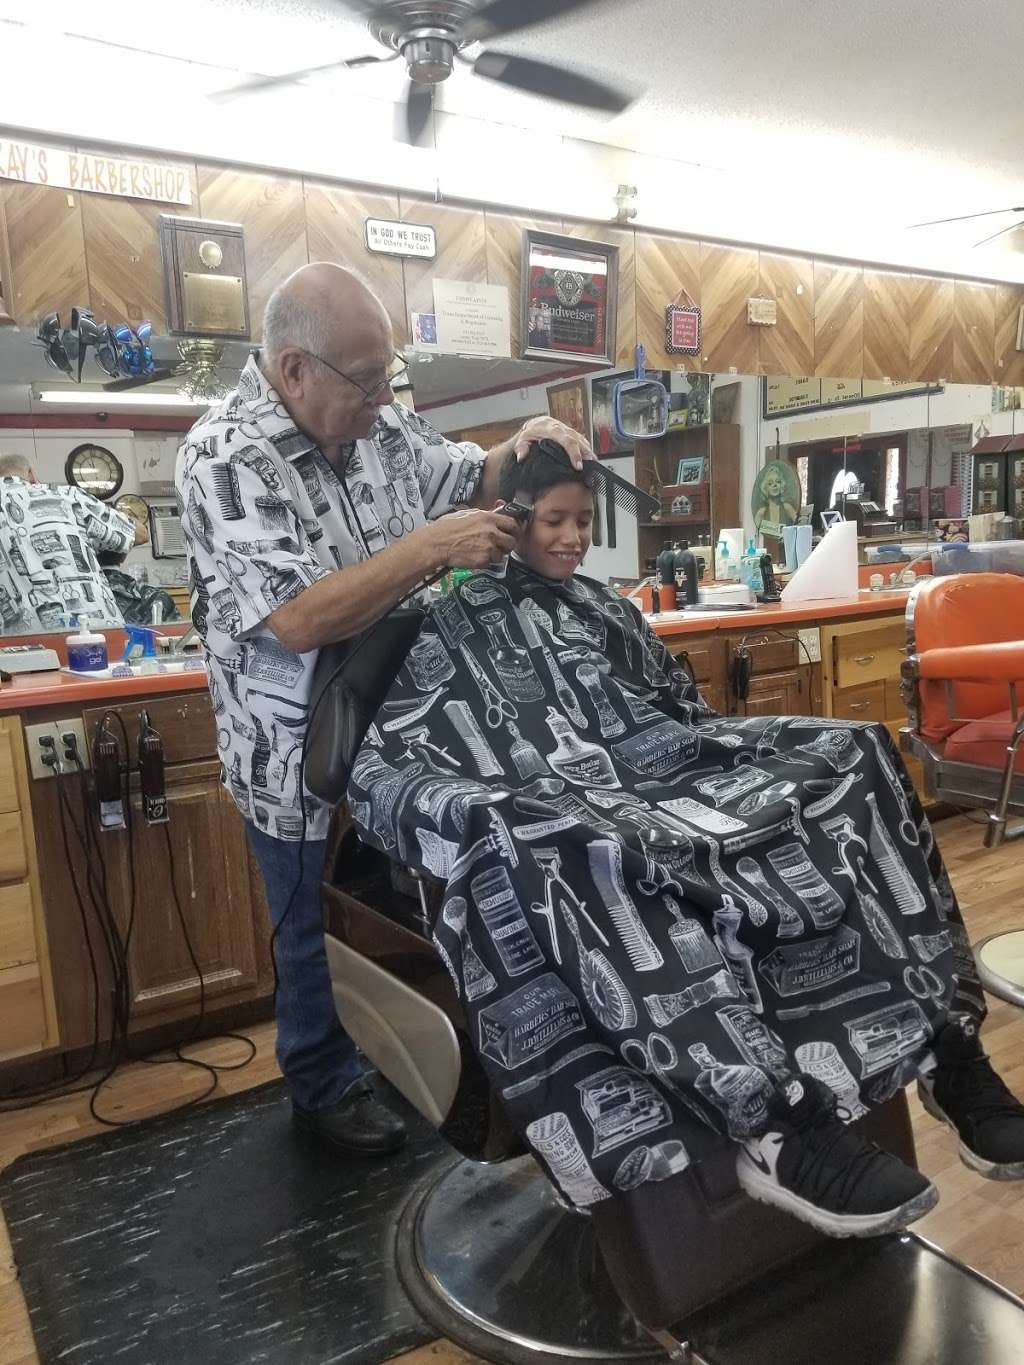 Rays Barber Shop | 1813 Castroville Rd, San Antonio, TX 78237 | Phone: (210) 438-5680